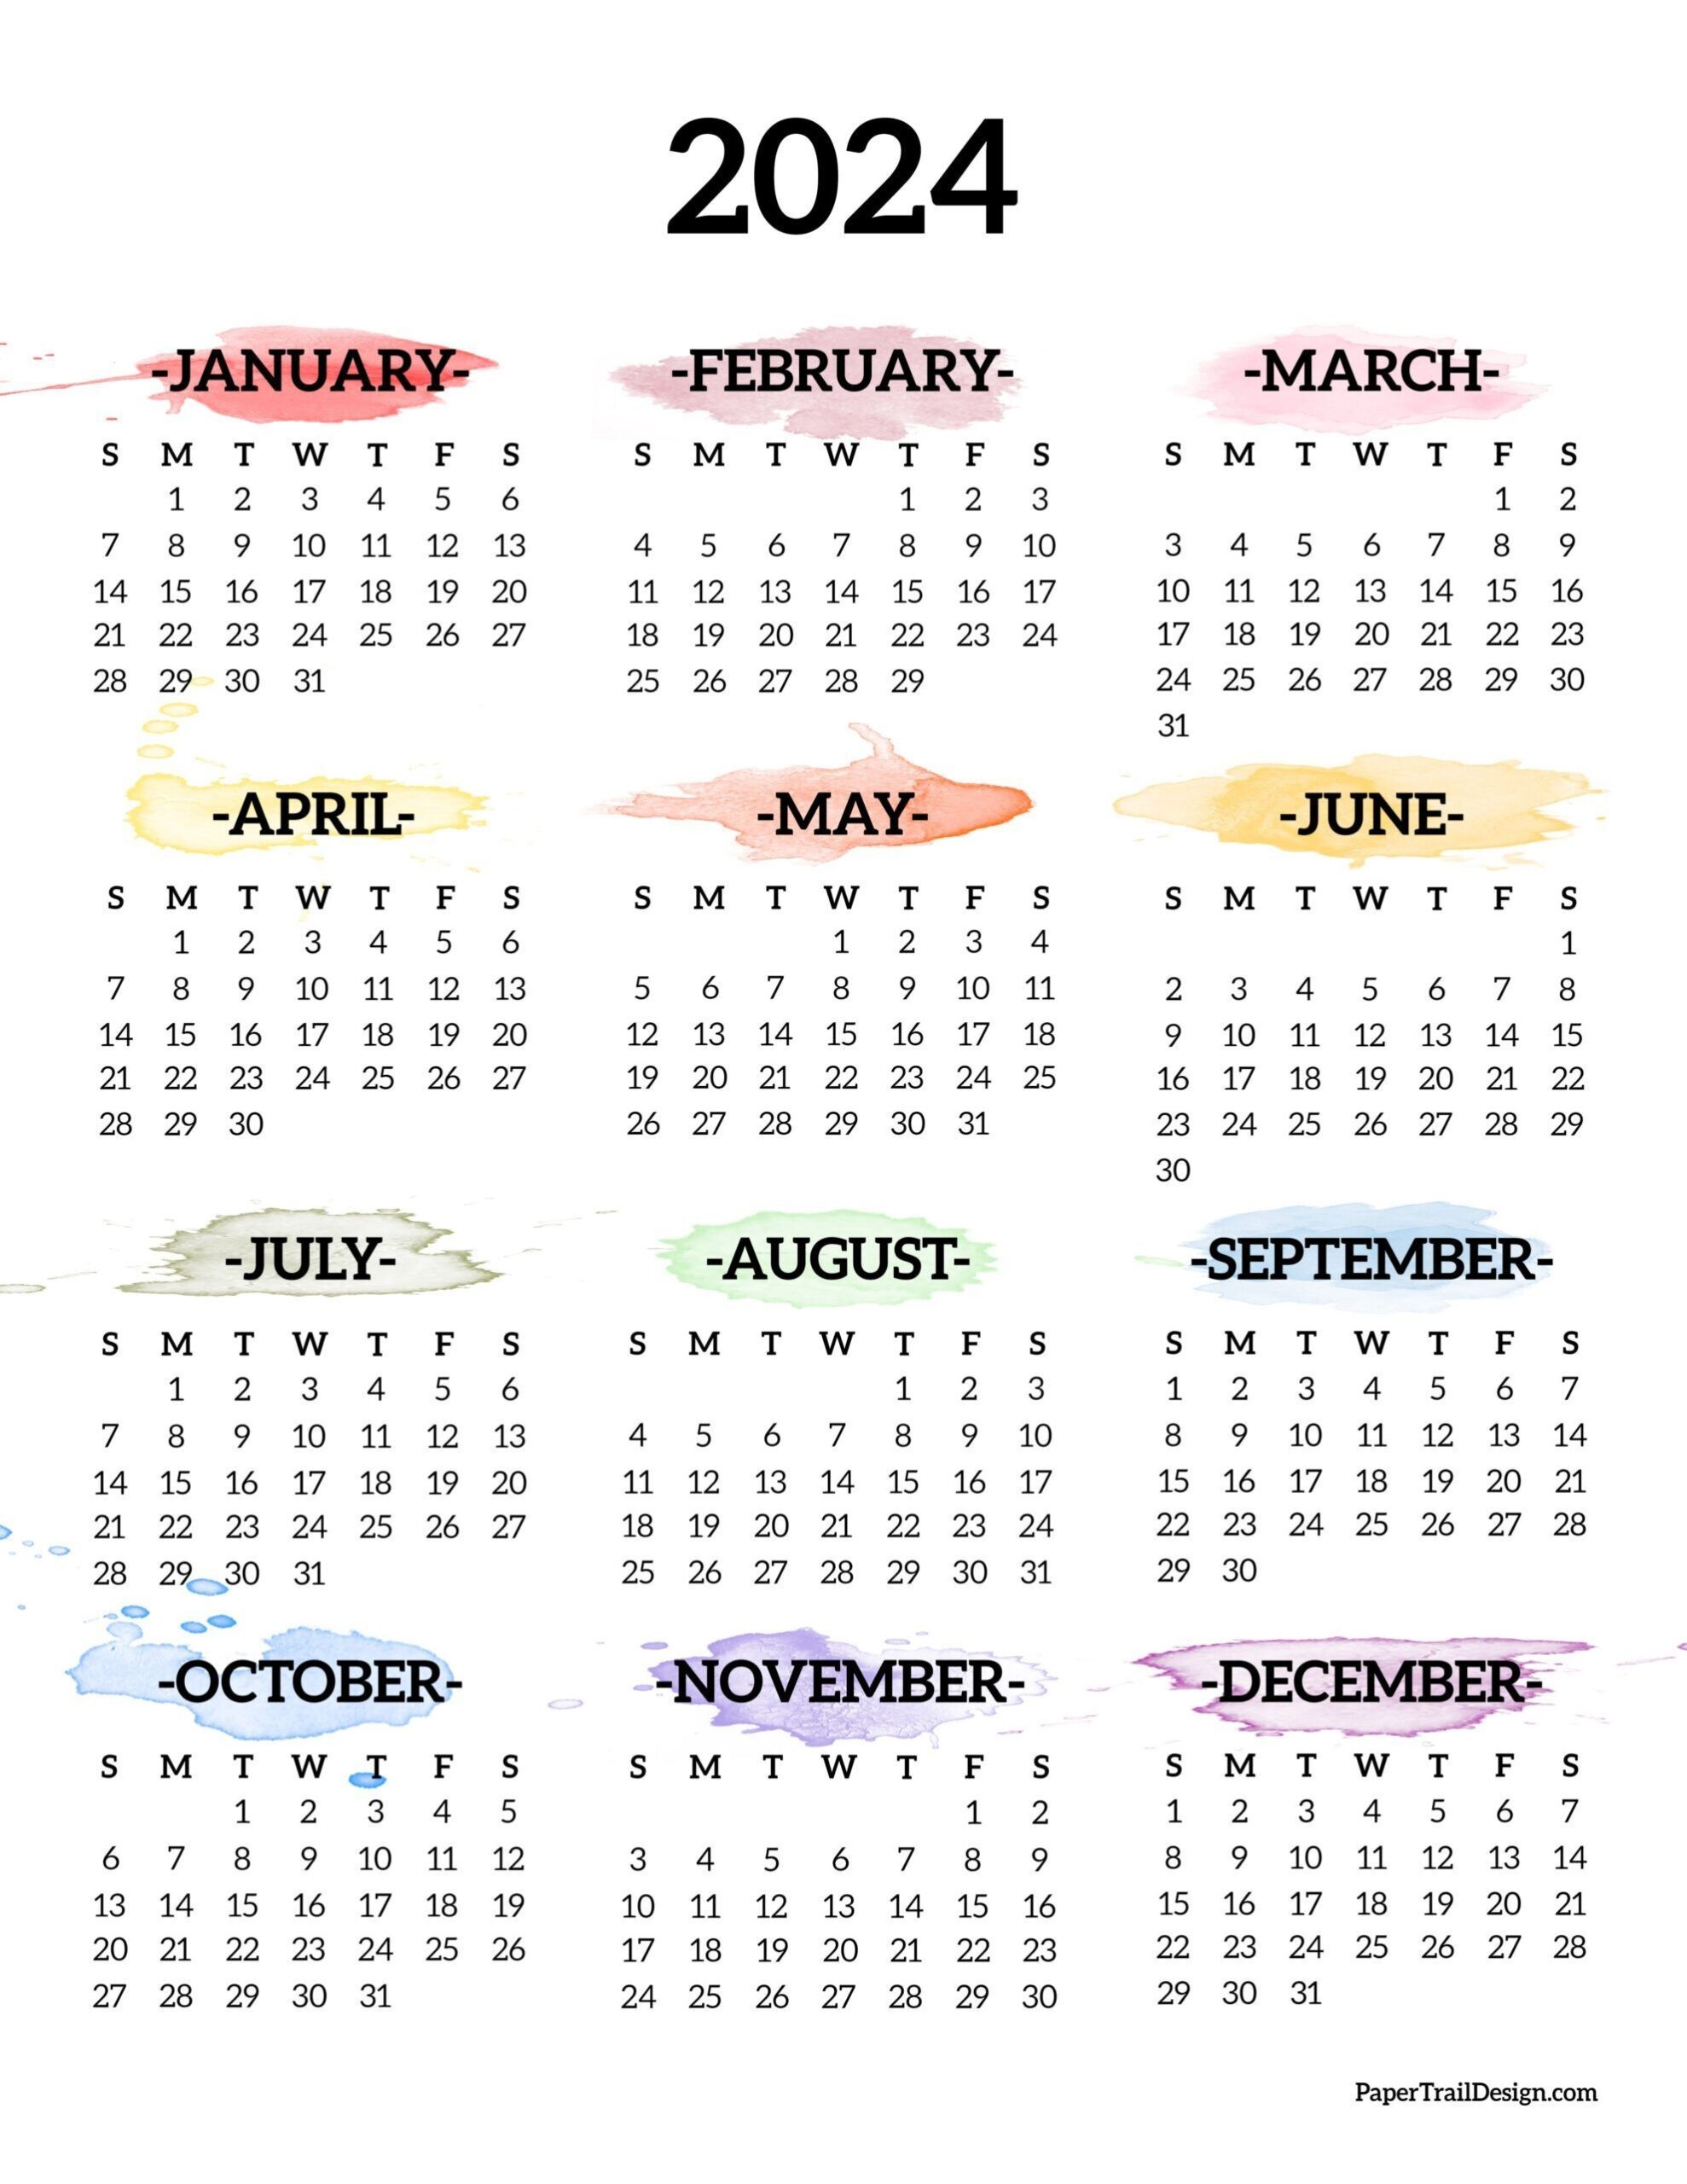 Print This Fun 2024 One Page Calendar In A Fun Rainbow Watercolor - Free Printable 2024 Mini Diy Photo Calendar